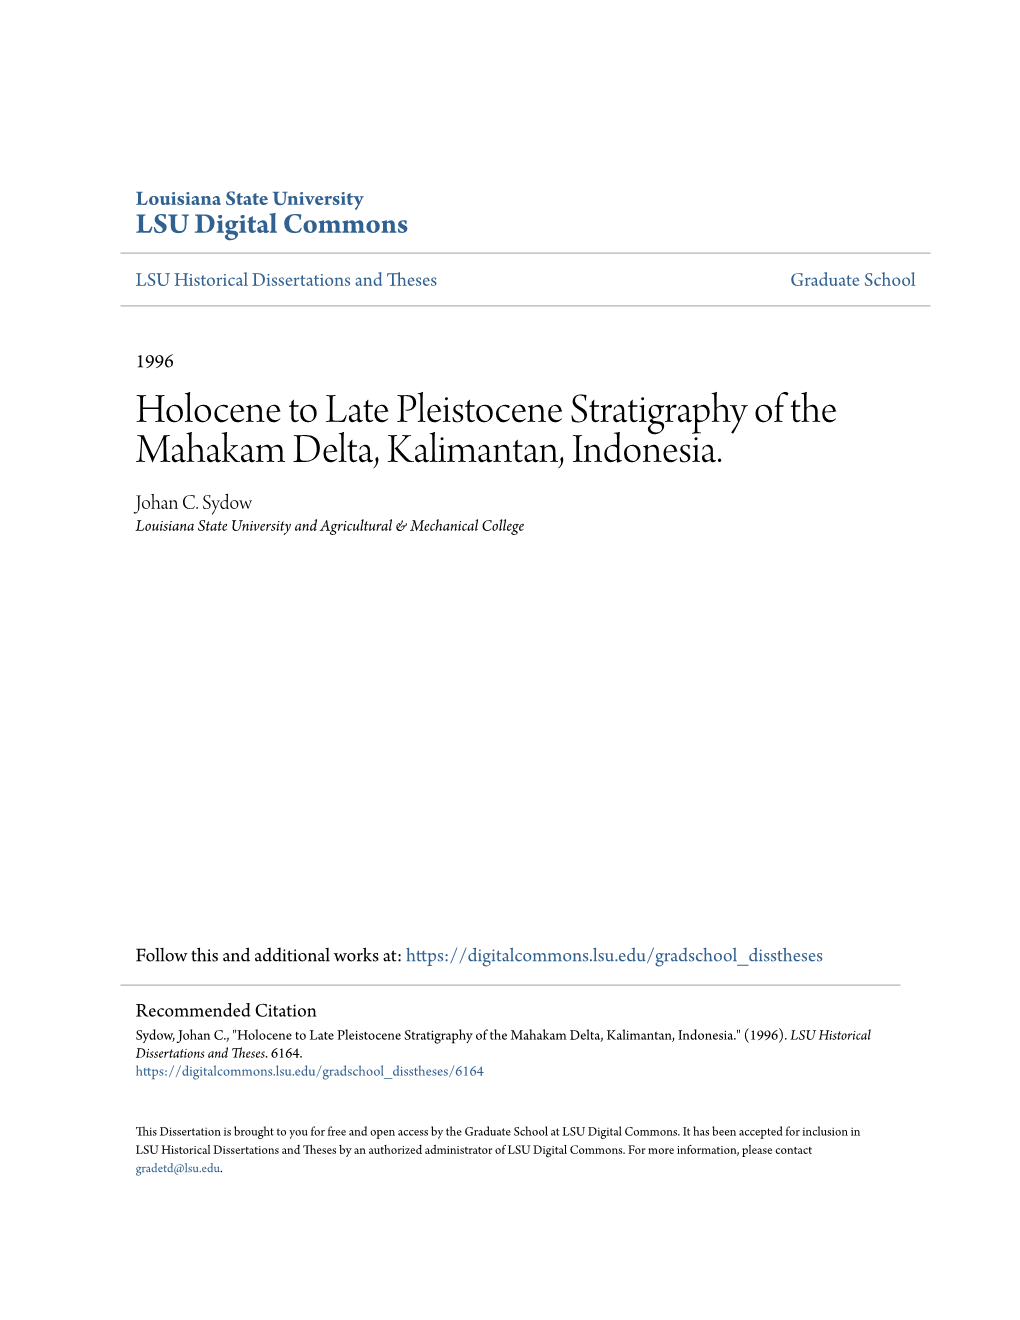 Holocene to Late Pleistocene Stratigraphy of the Mahakam Delta, Kalimantan, Indonesia